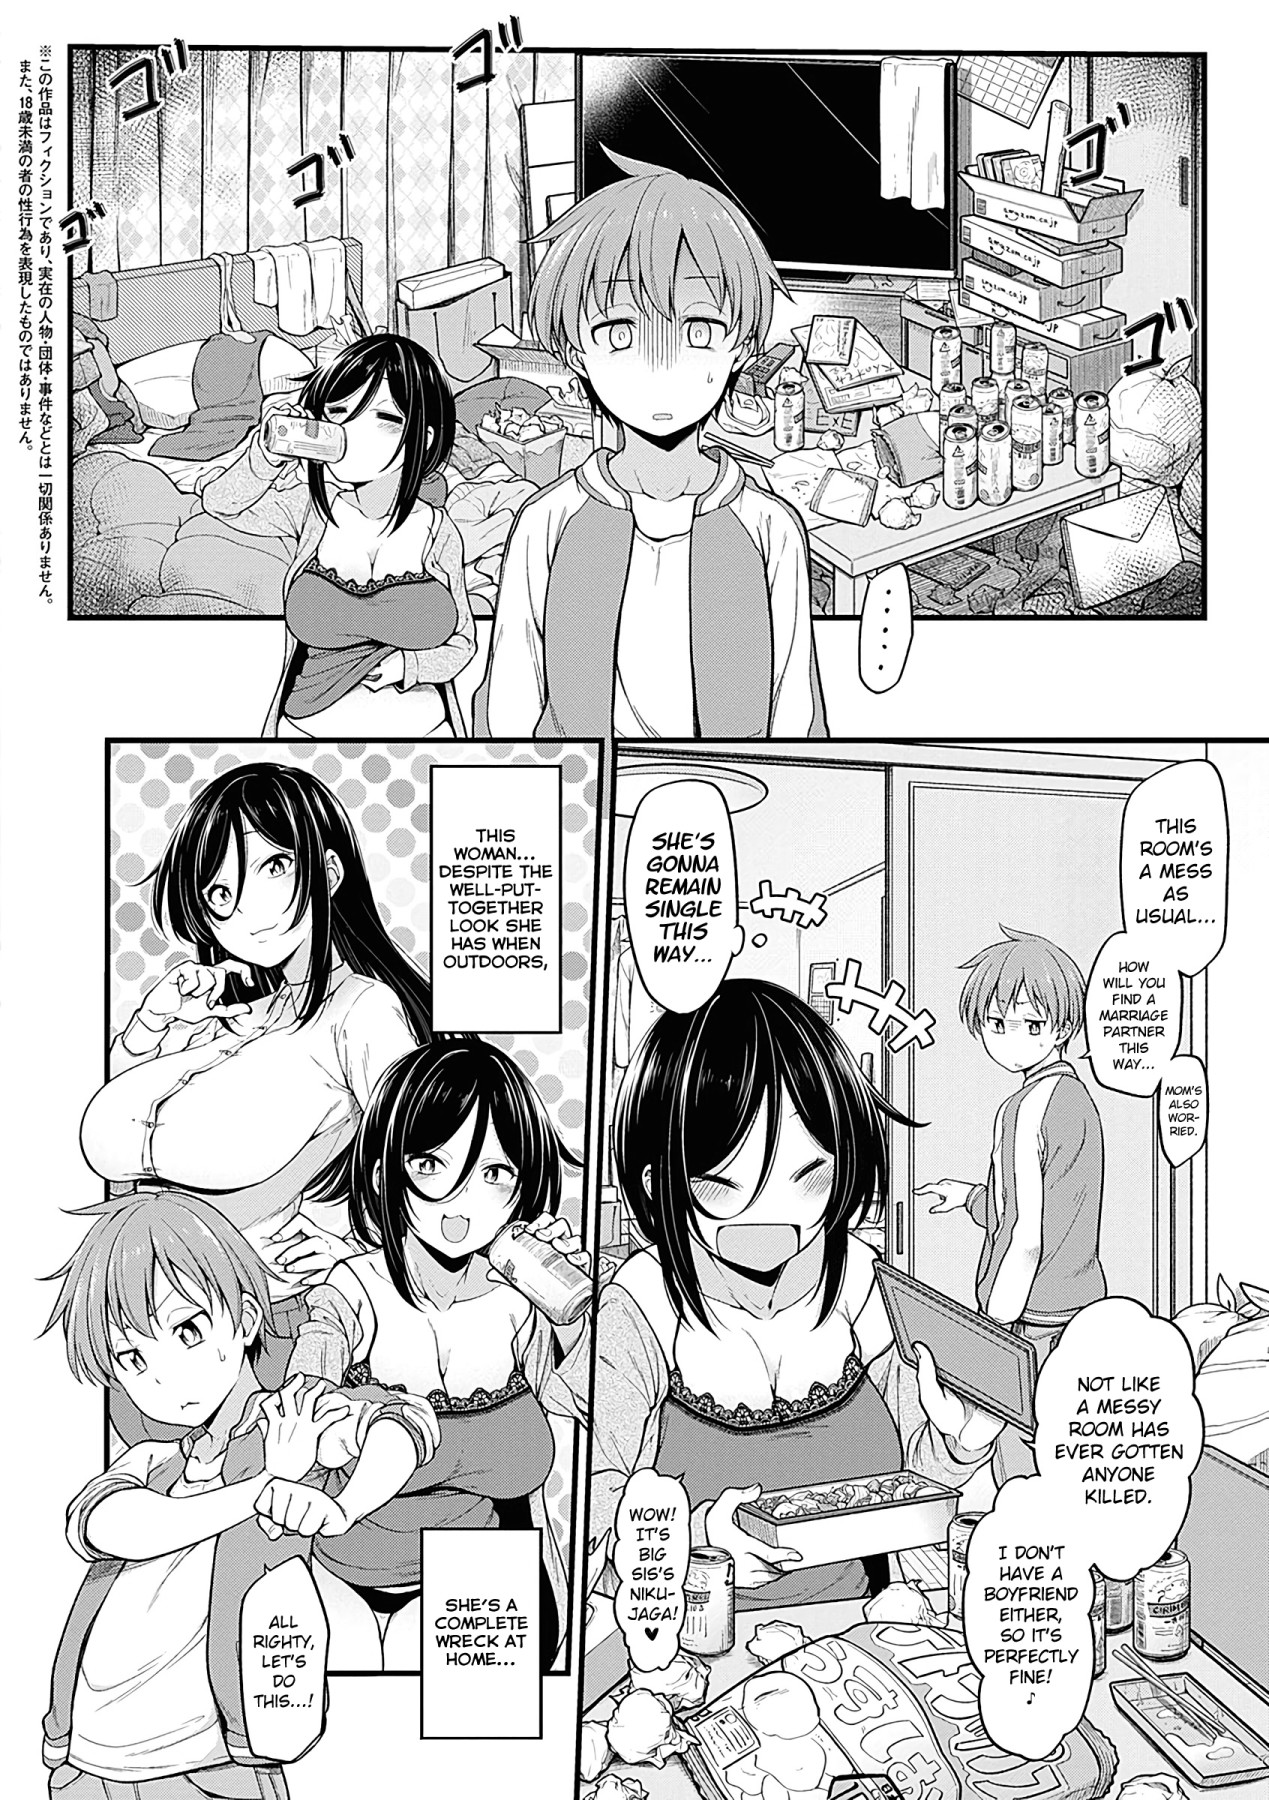 Hentai Manga Comic-Drunken Ecstasy + Extra-Read-2